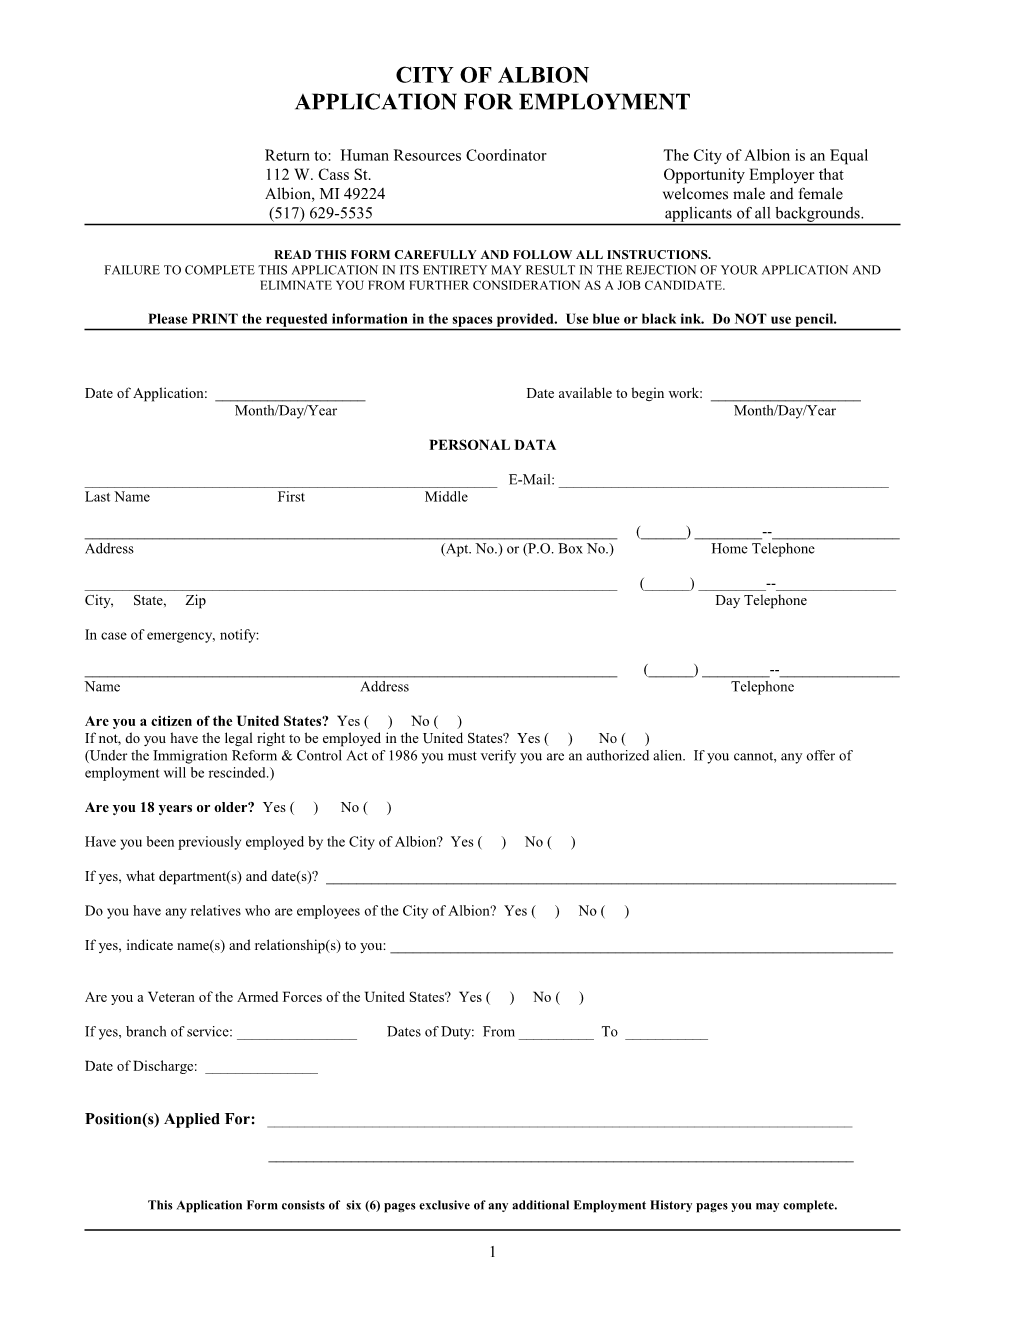 City of Albion Job Application Form